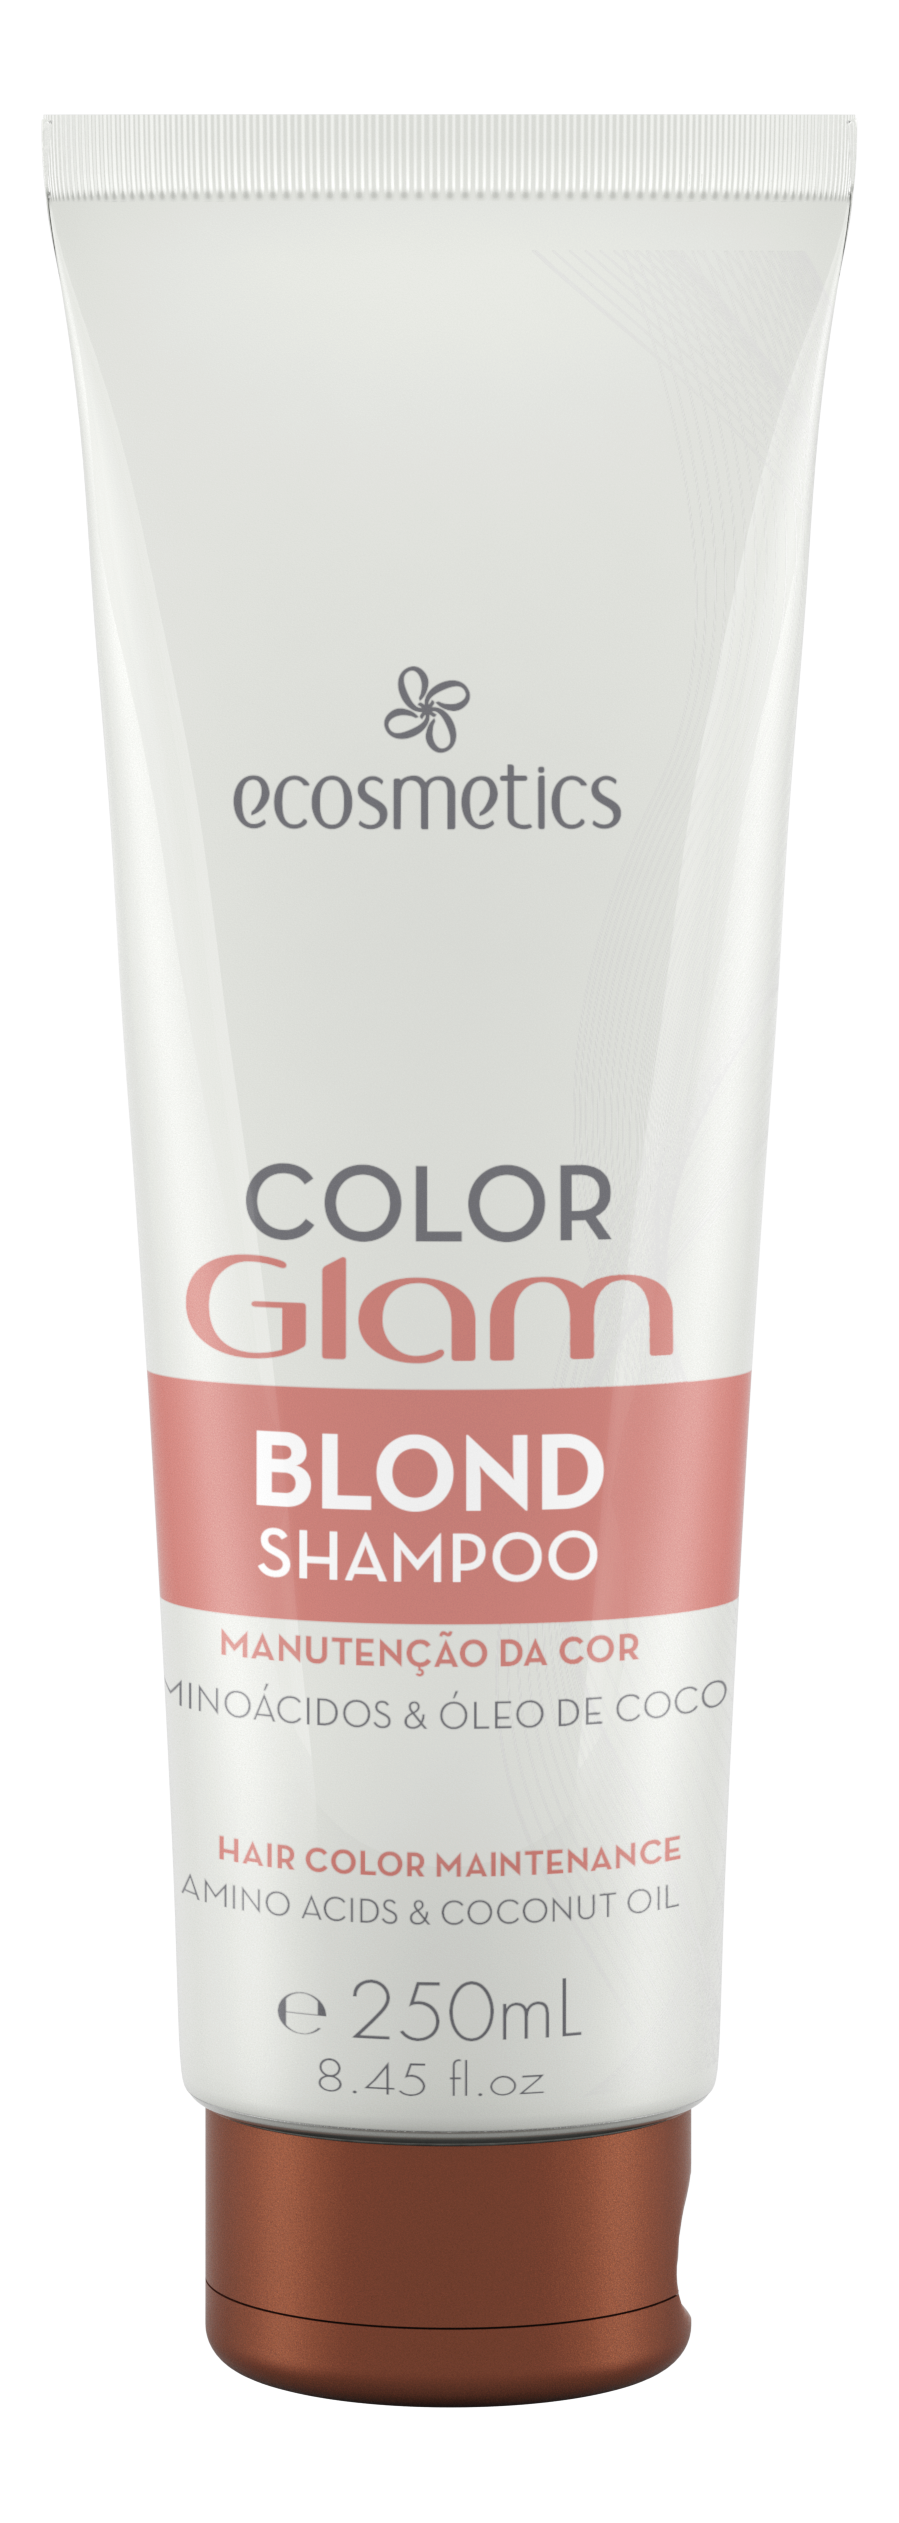 Blond Shampoo